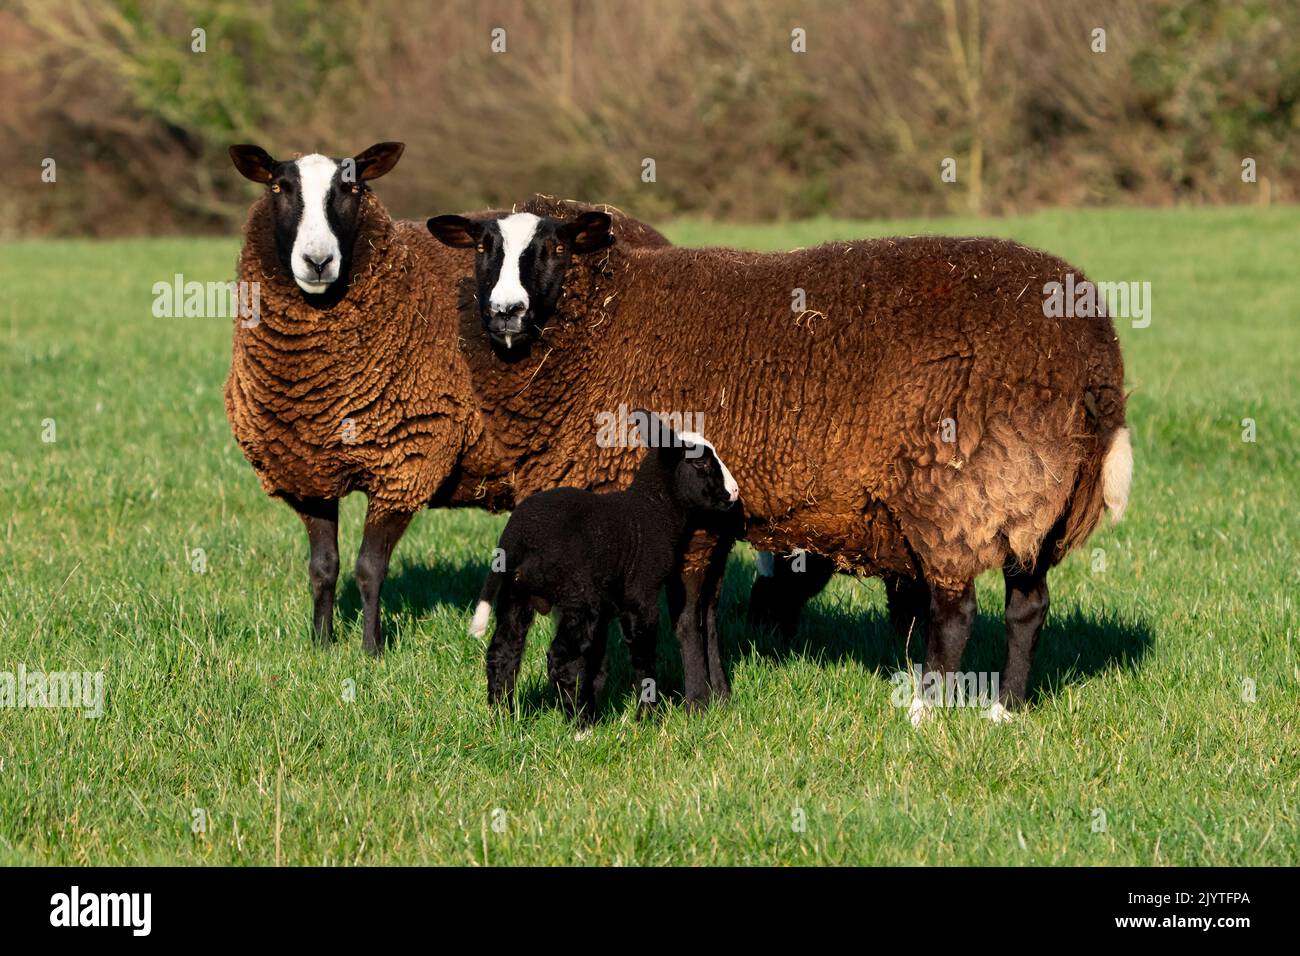 Balwen Welsh Mountain sheep (Ovis aries) standing in a meadow, England Stock Photo